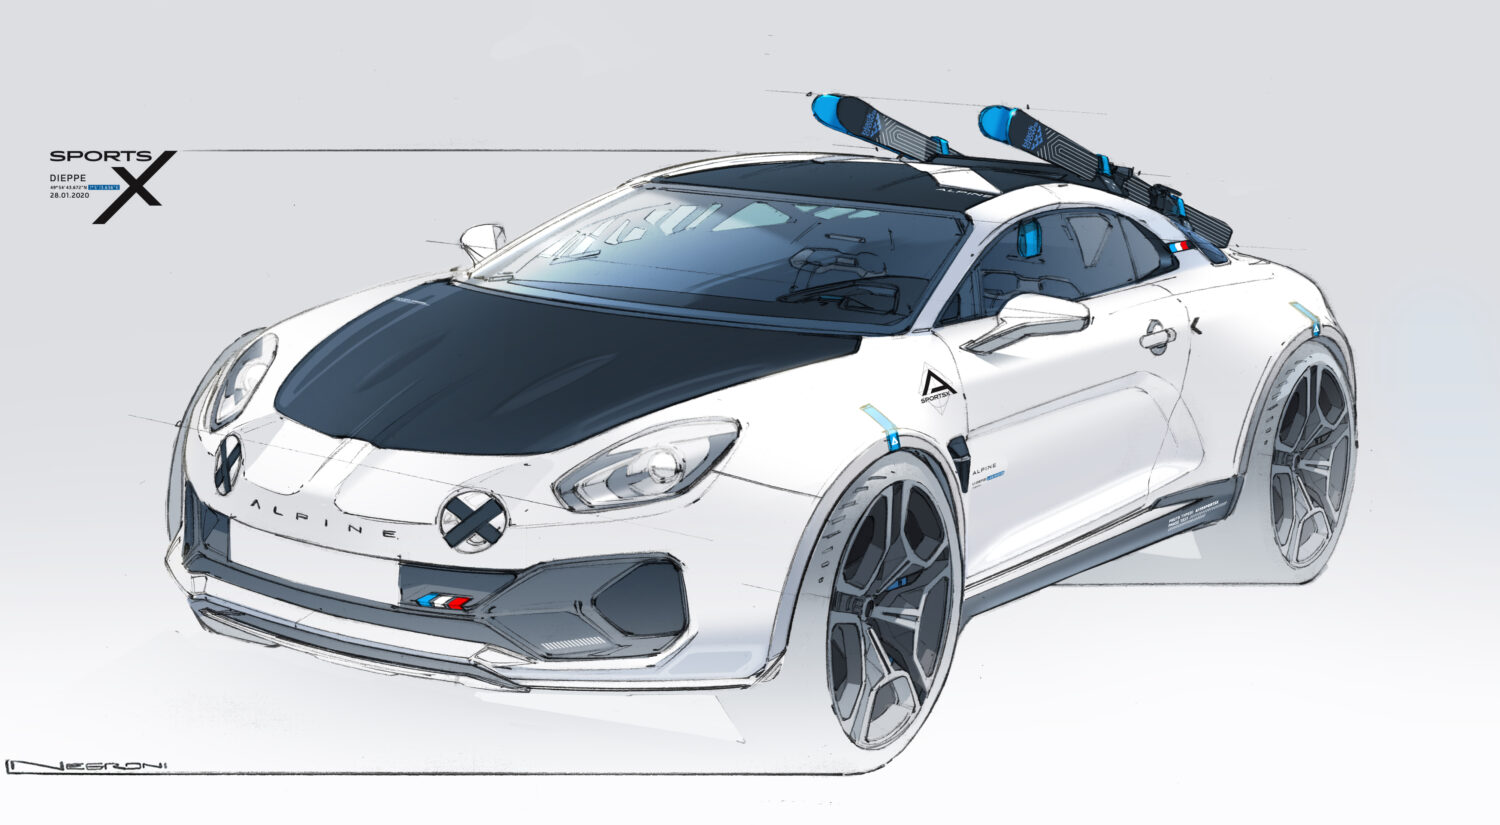 2020 - Show-car Alpine A110 SportsX